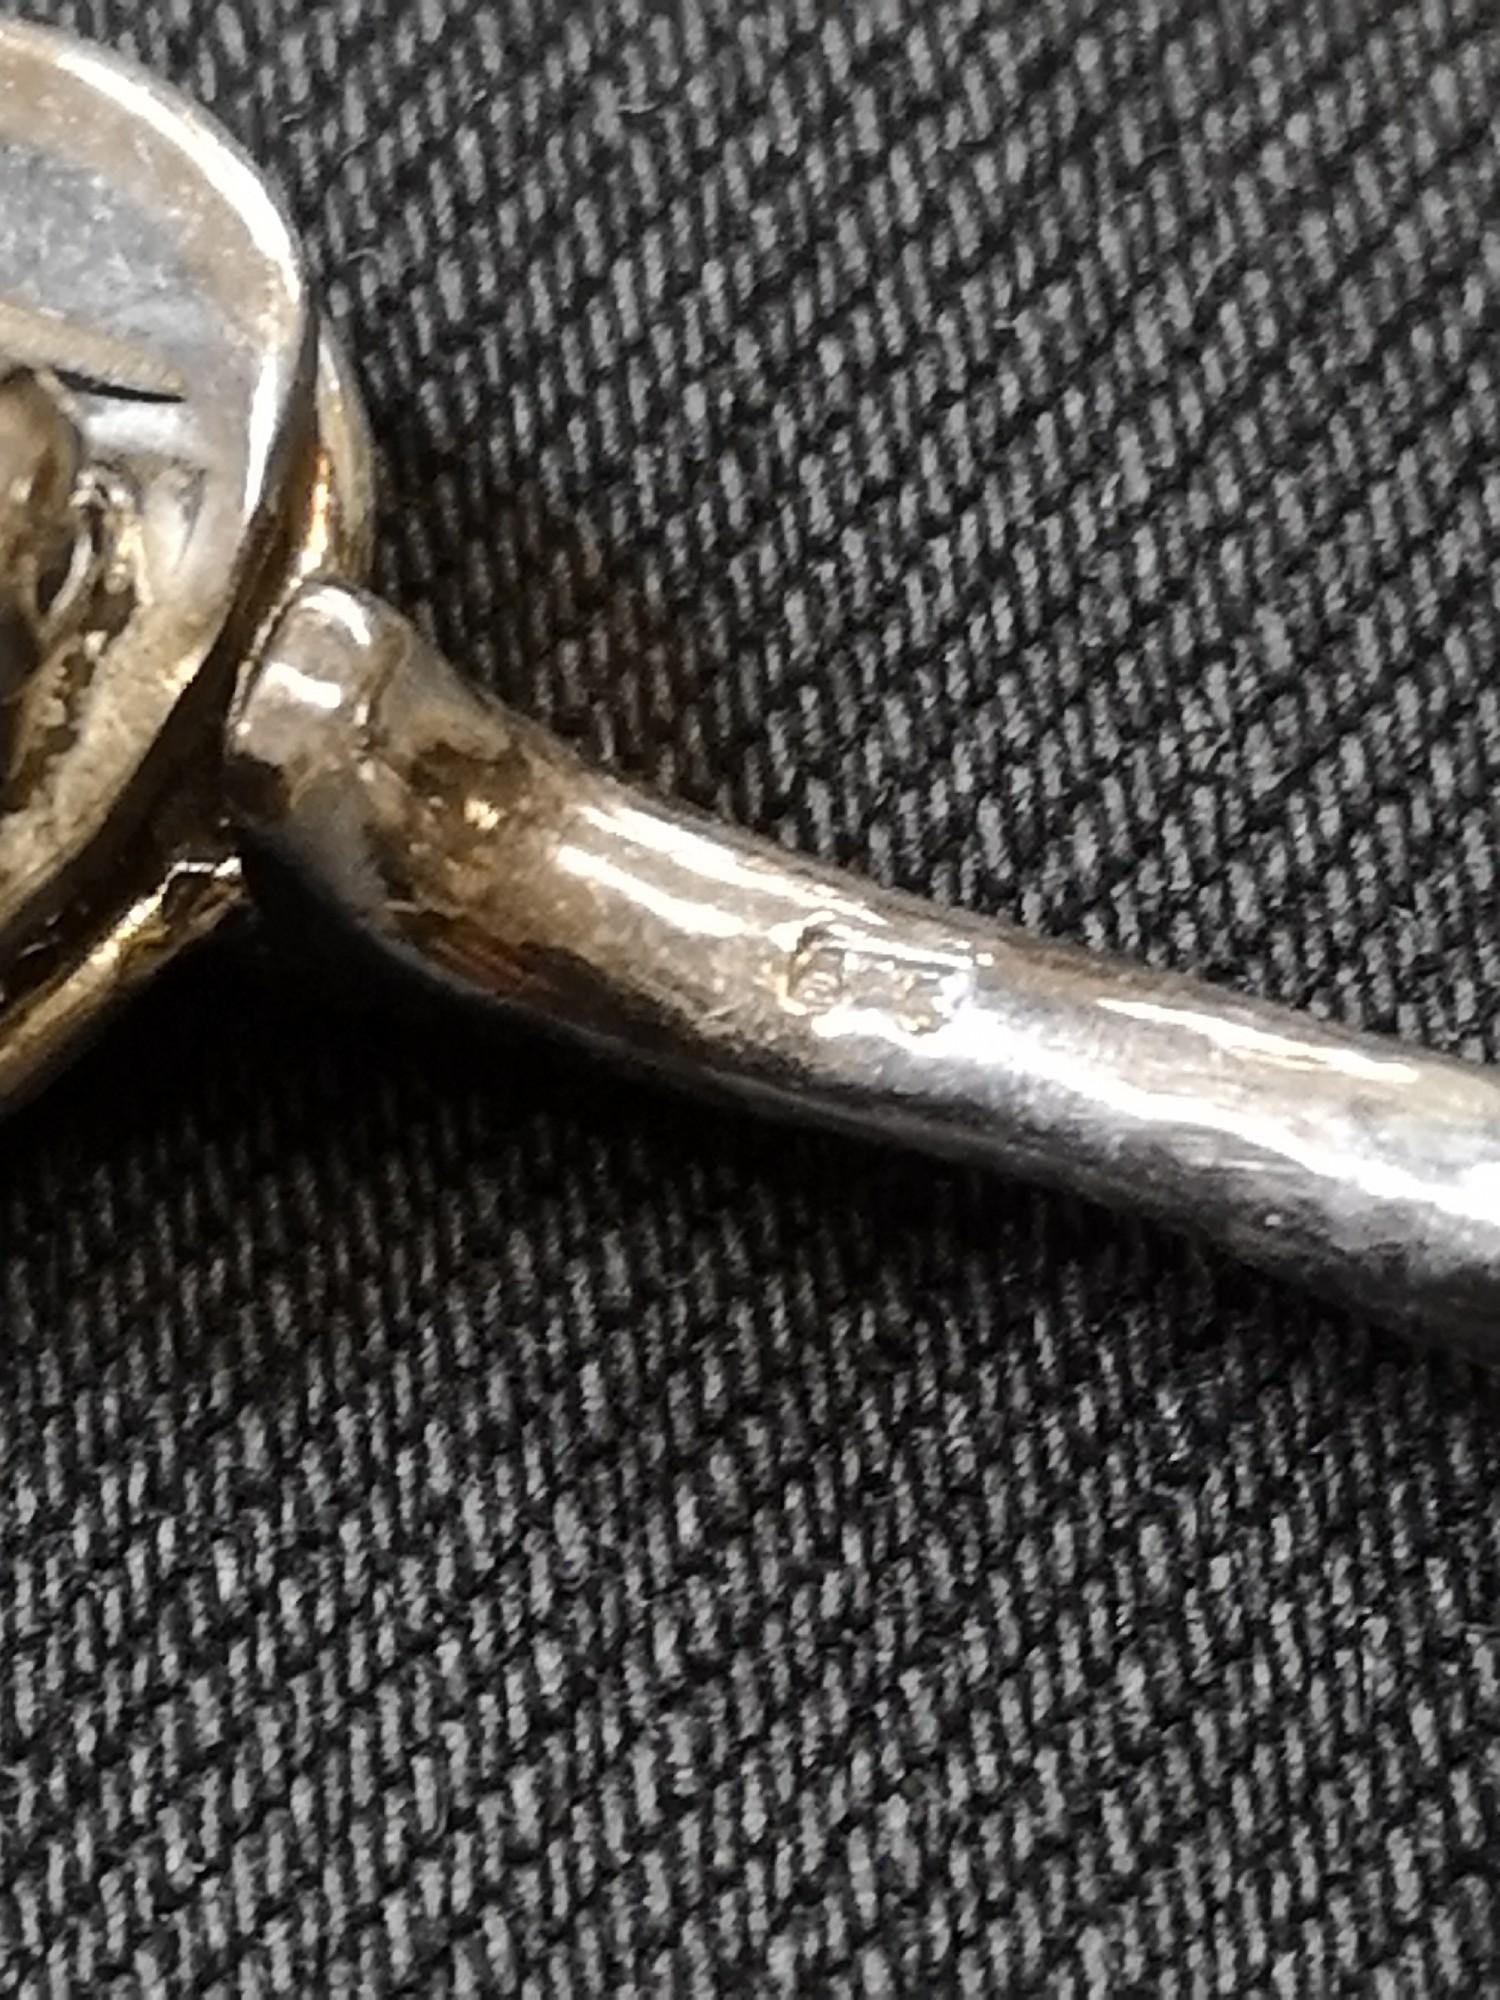 Silver 925 violin brooch. - Image 2 of 2